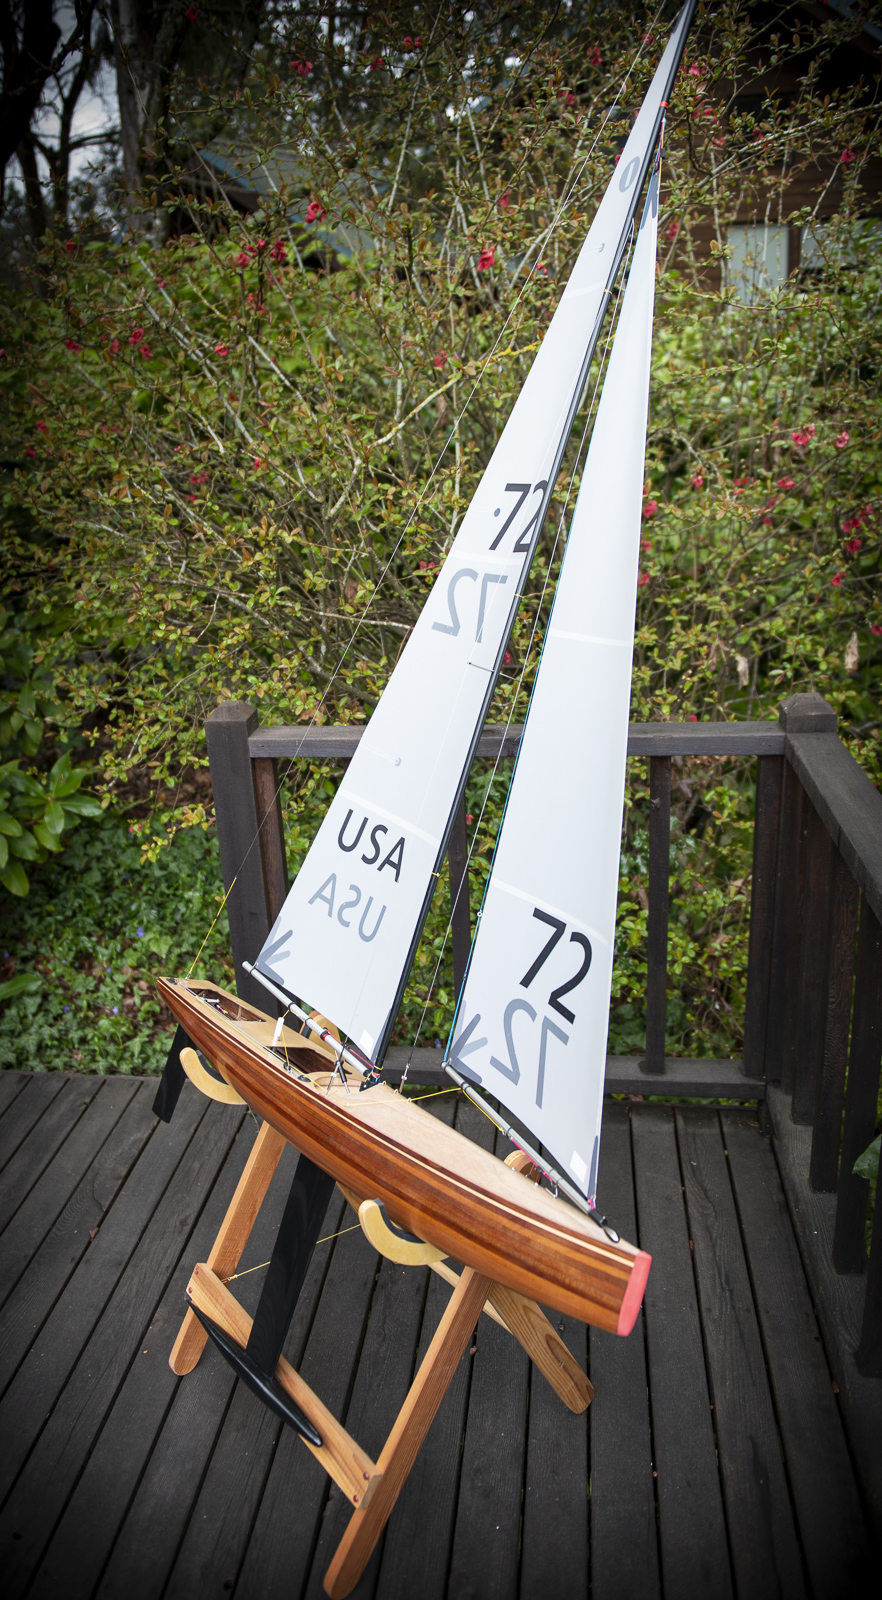 used iom rc sailboat